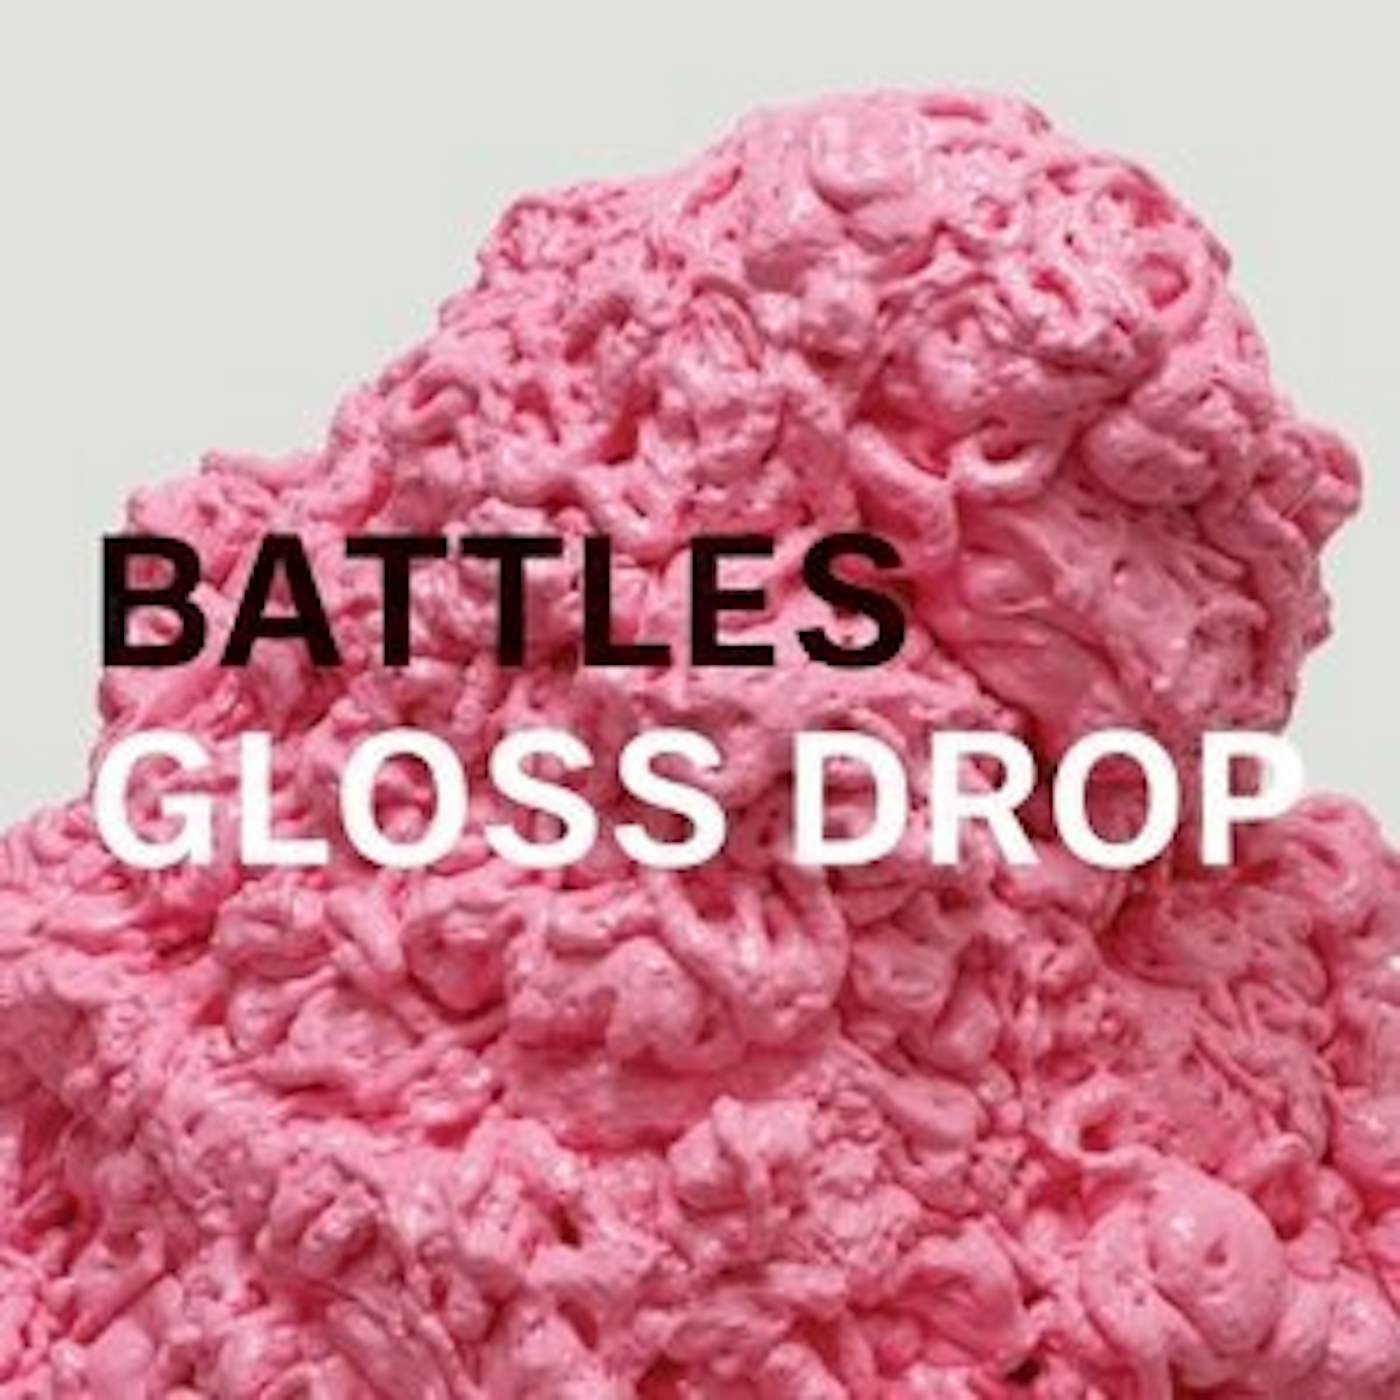 Battles Gloss Drop Vinyl Record